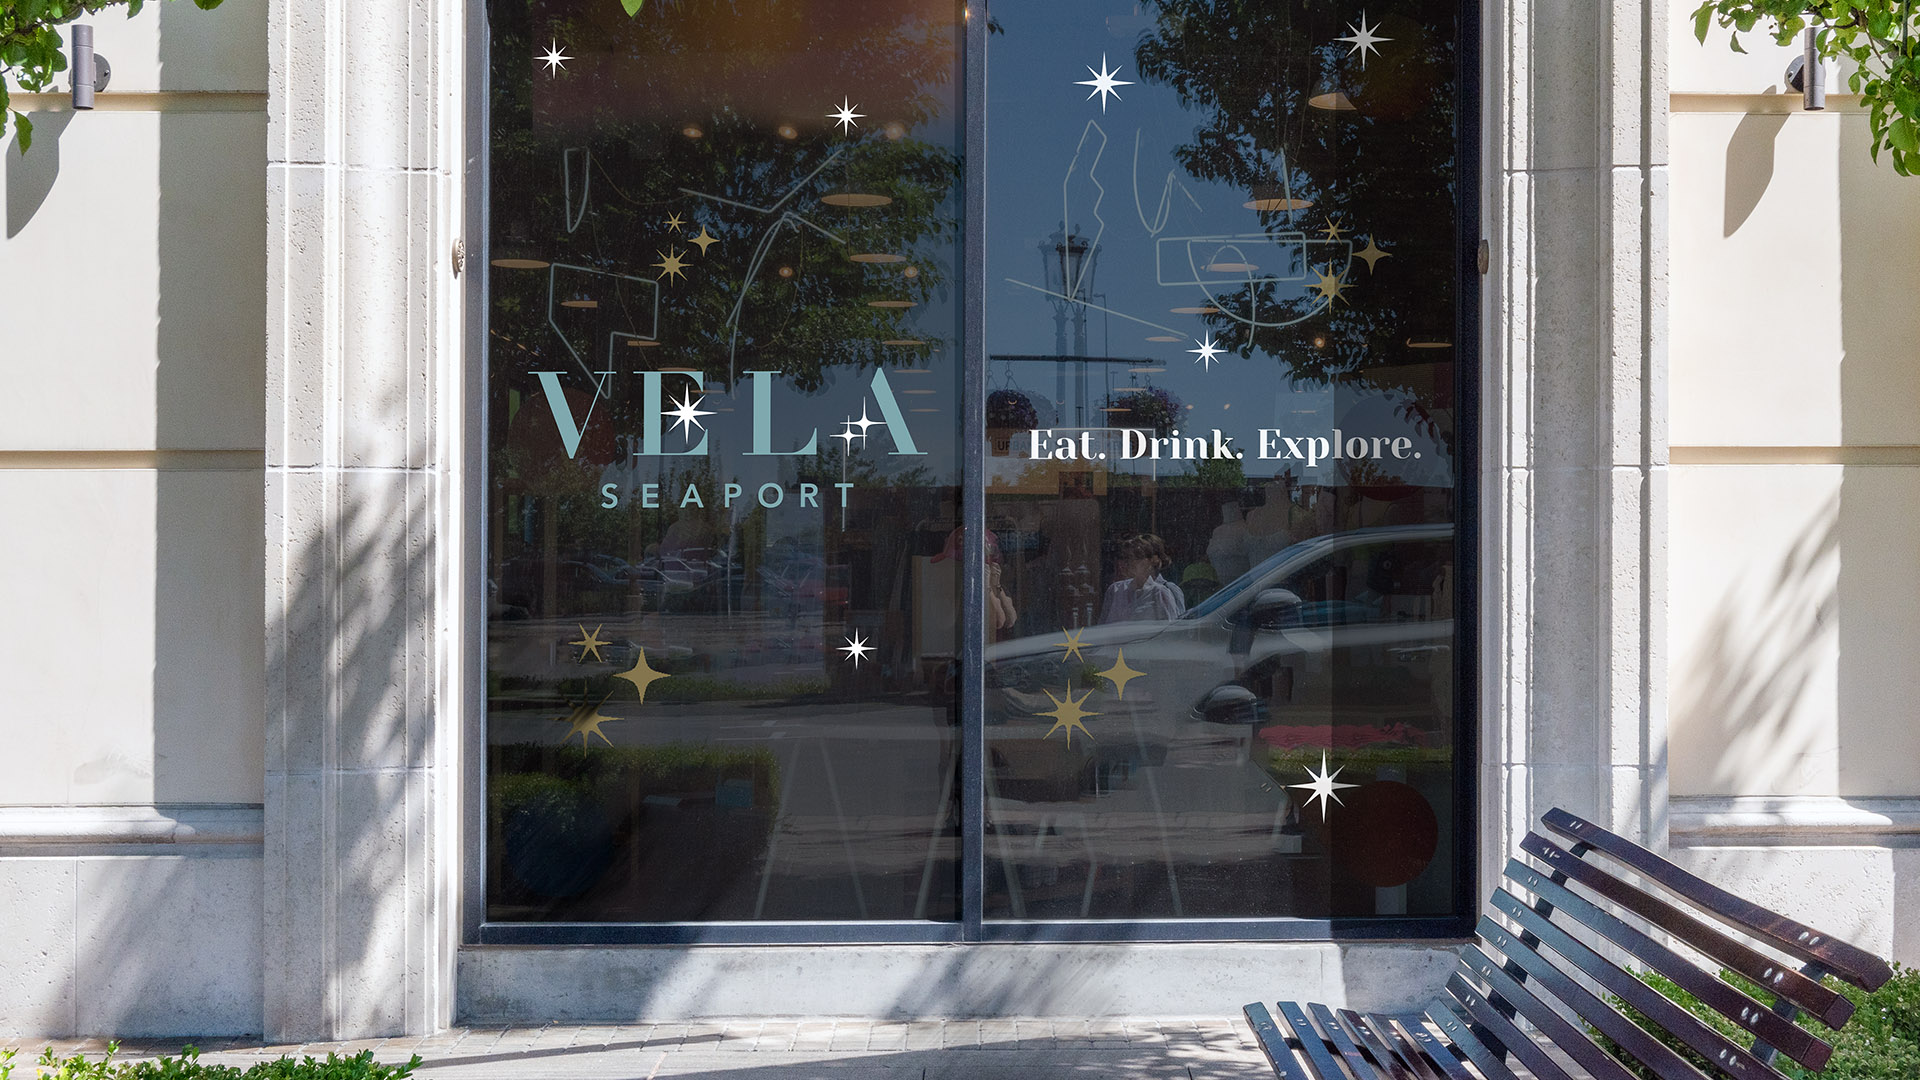 vela seaport windows with white stars